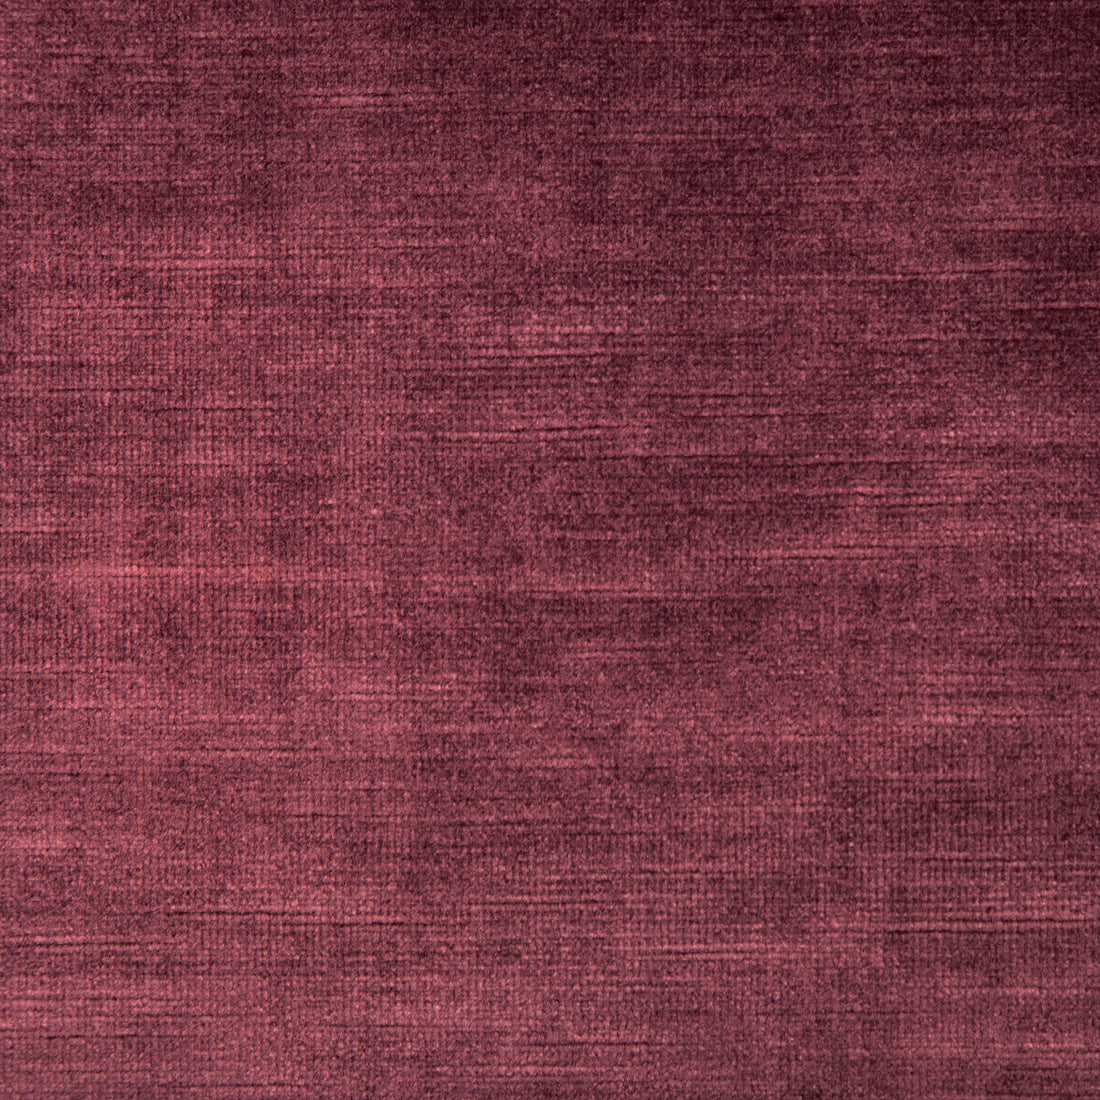 Venetian fabric in cabernet color - pattern 31326.909.0 - by Kravet Design